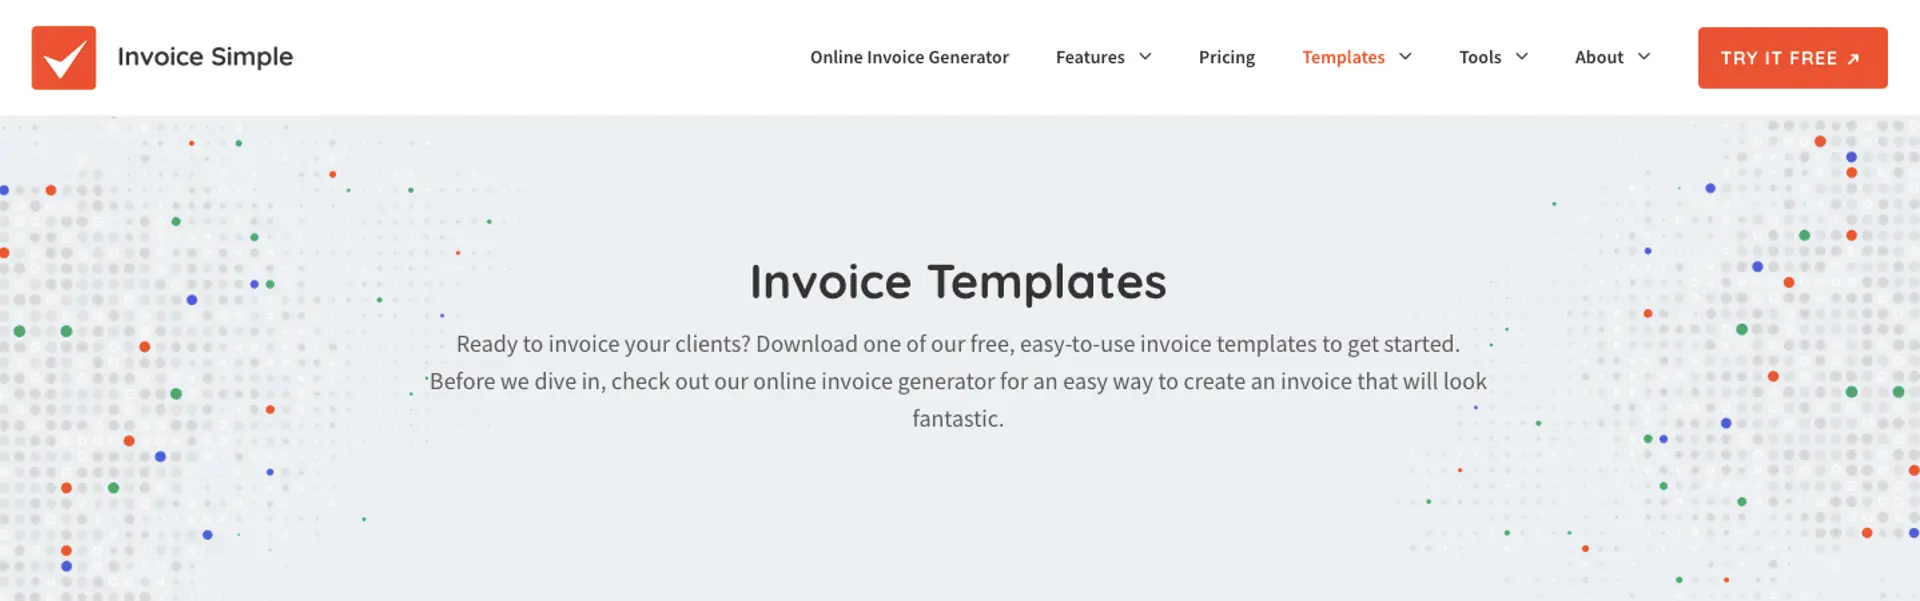 Invoice Simple invoice templates